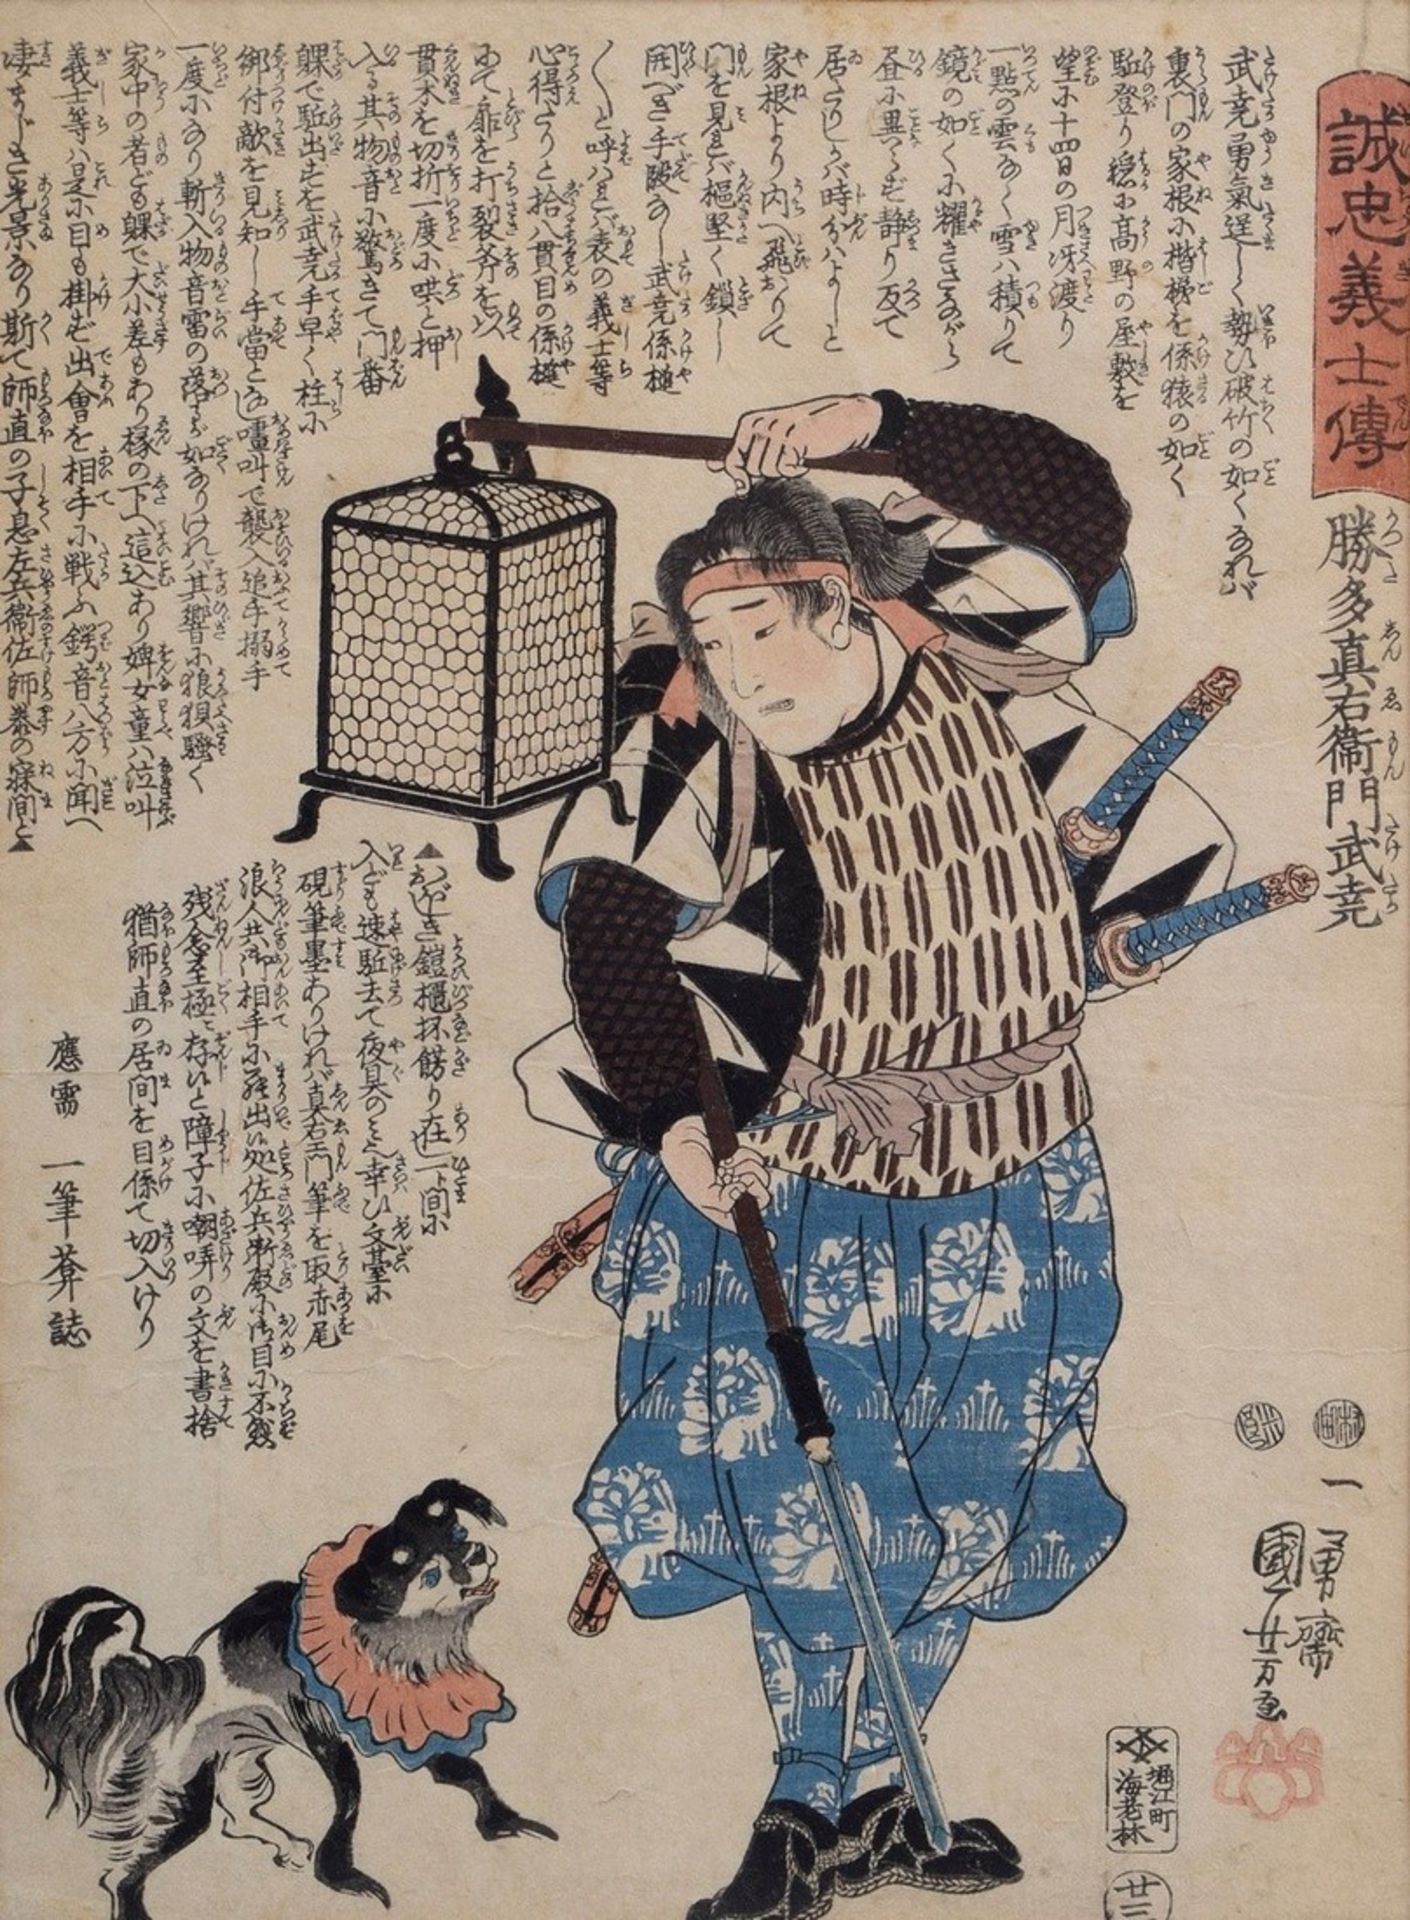 12 Kuniyoshi, Utagawa (1798-1861) Woodblock prints depicting samurai warriors from the series "Seic - Image 15 of 17